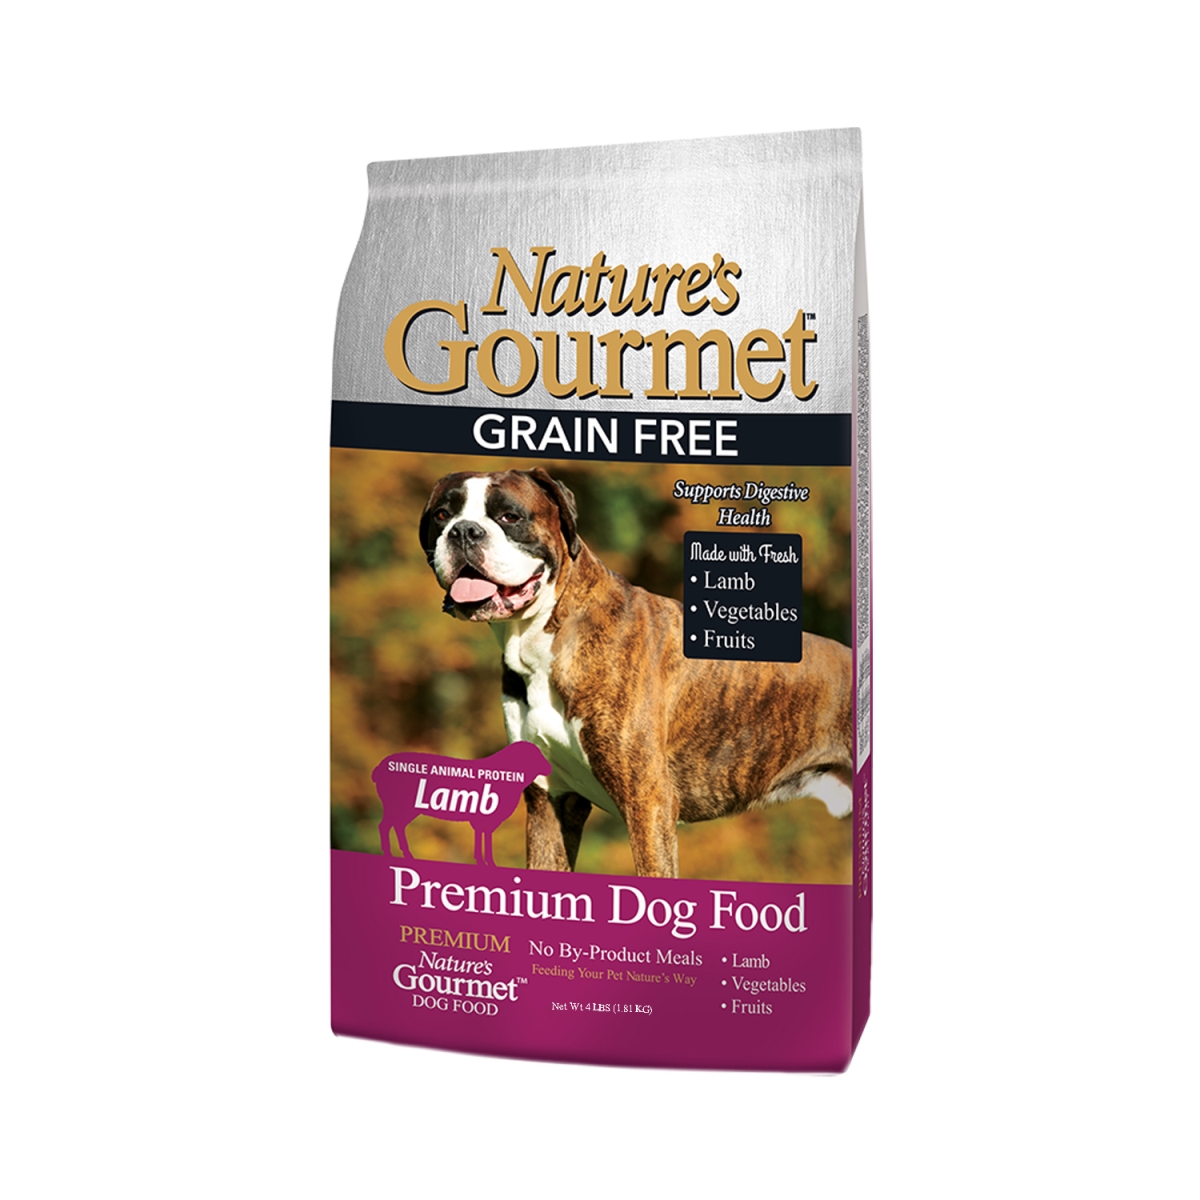 Ngdf-al0400-01 4 Lbs Grain-free Adult Dog Food, Lamb